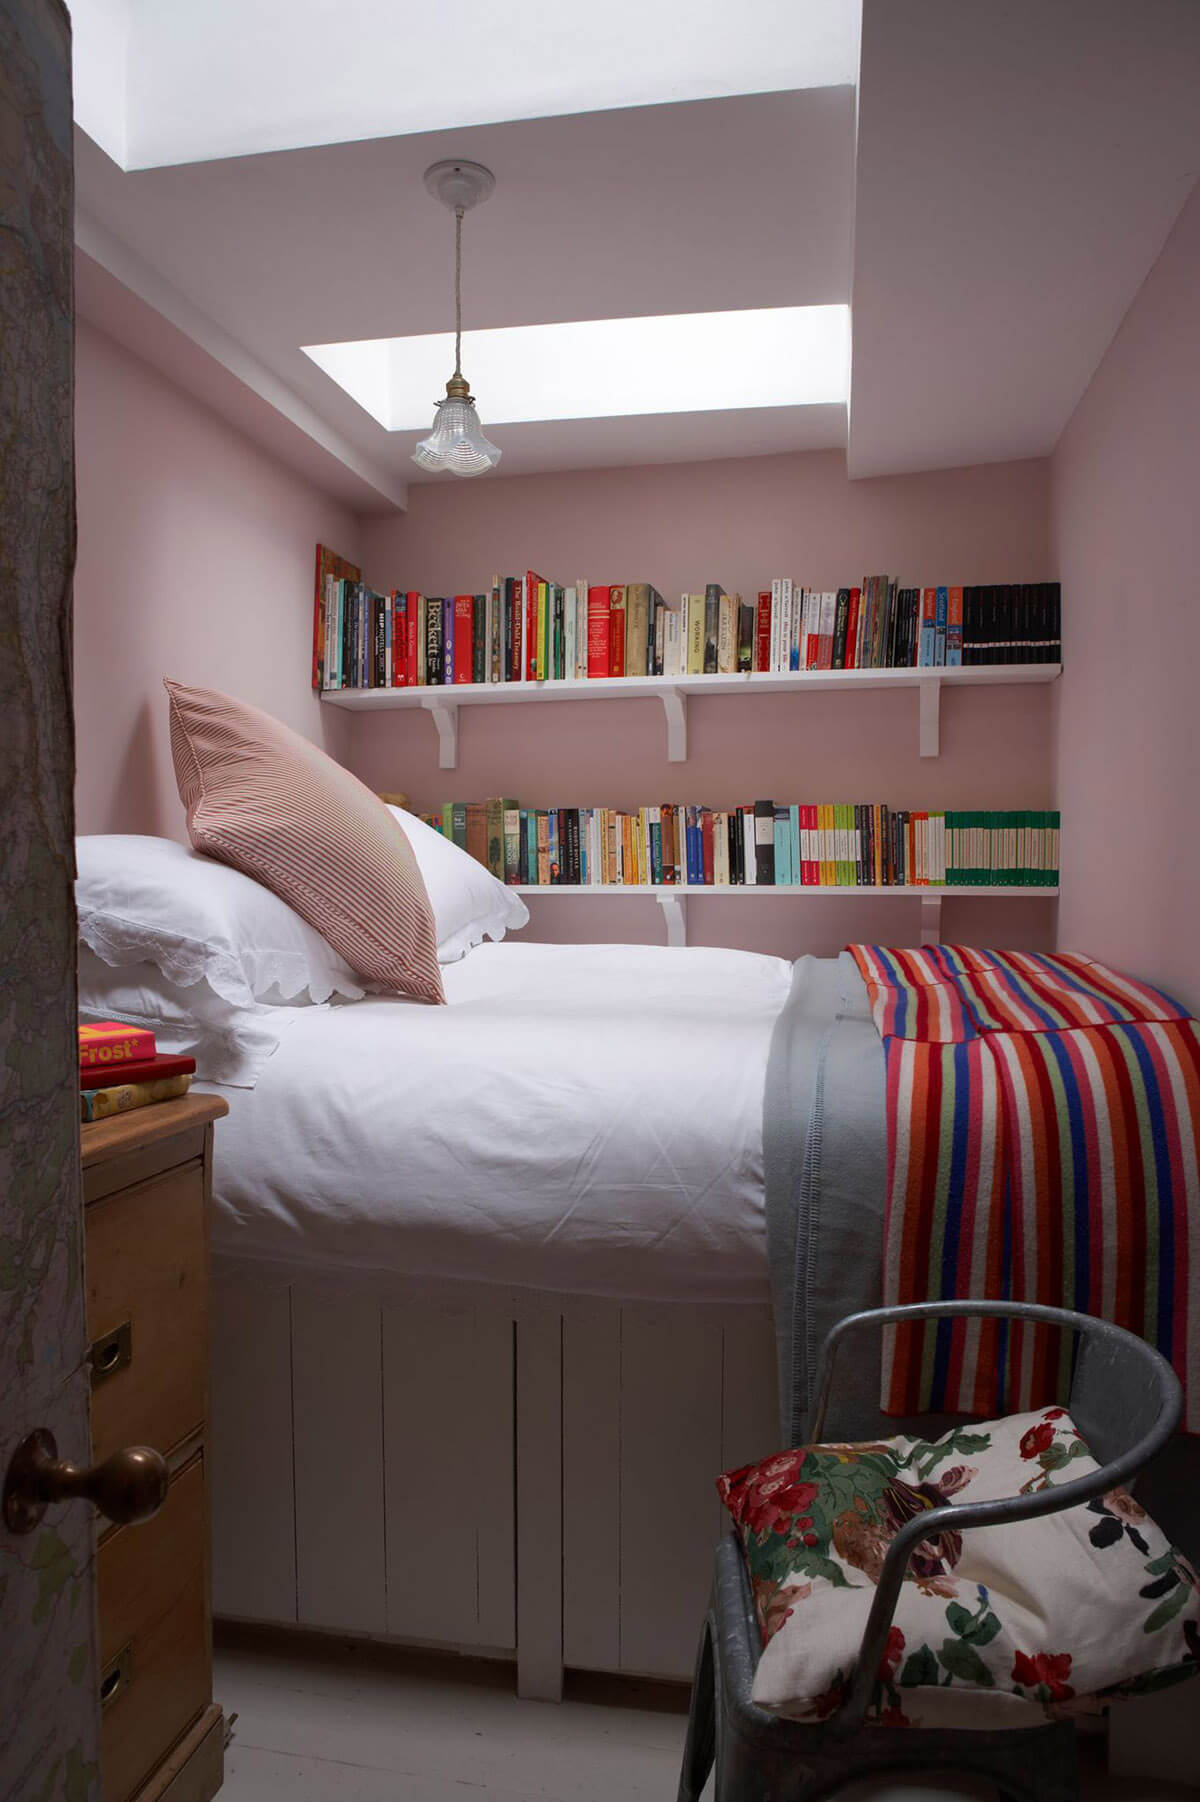 22 small bedroom designs and ideas homebnc.jpg